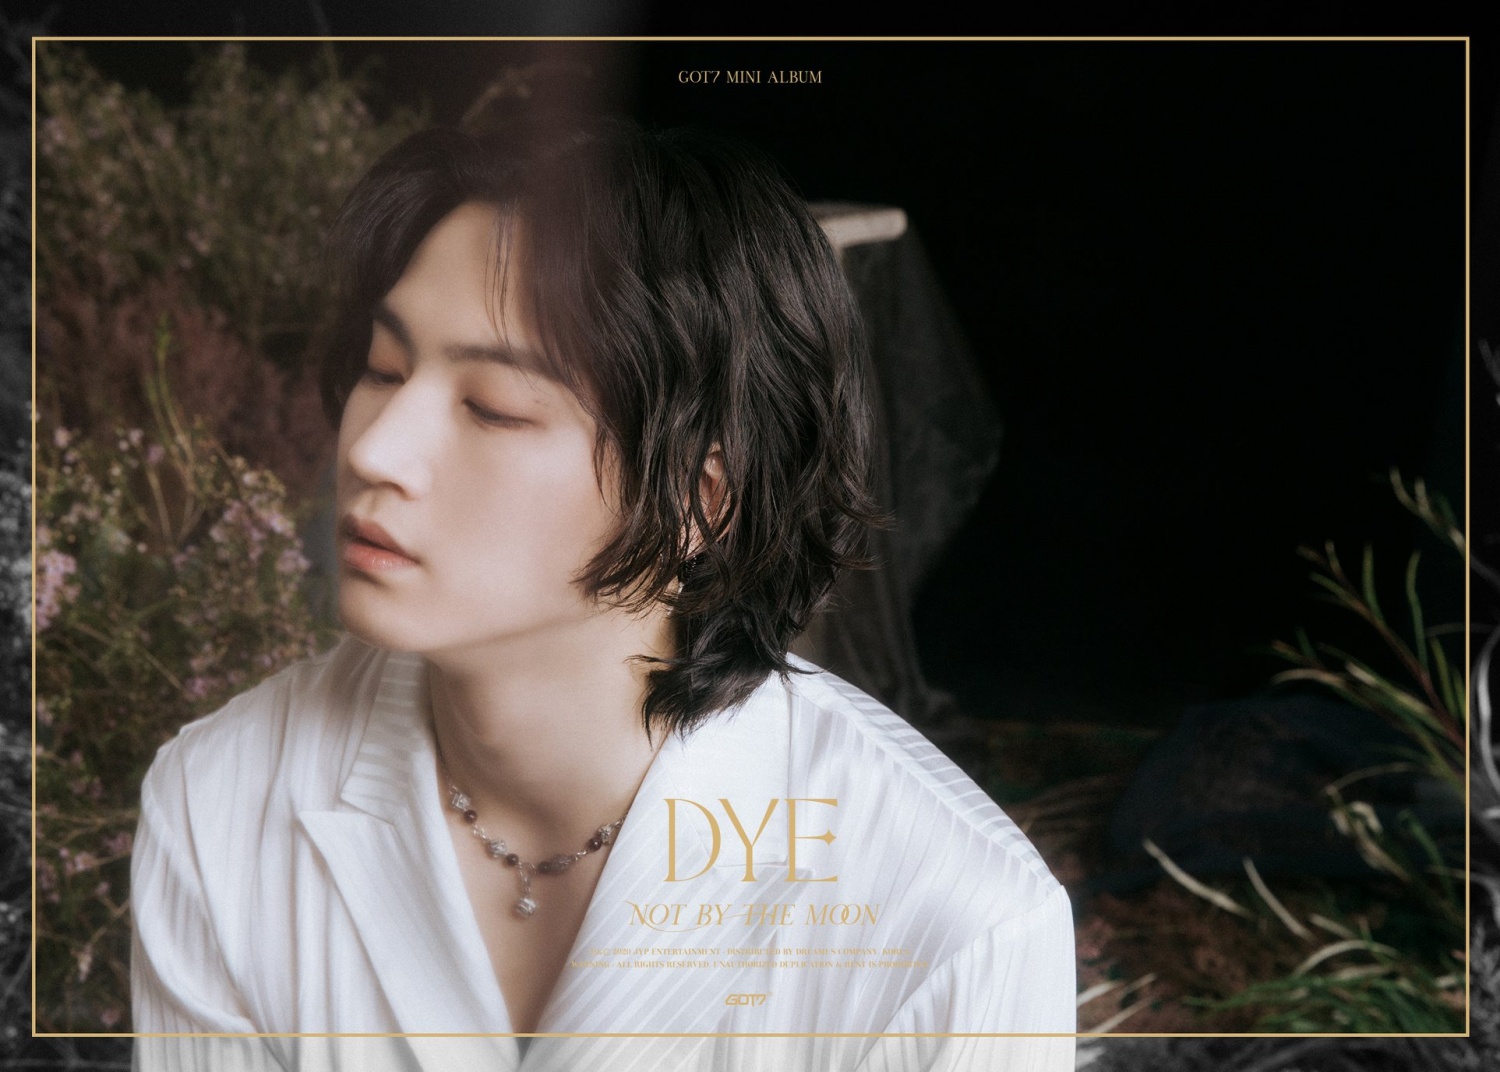 GOT7 Flaunt Elegant, Romantic Visuals in New "DYE" Teasers